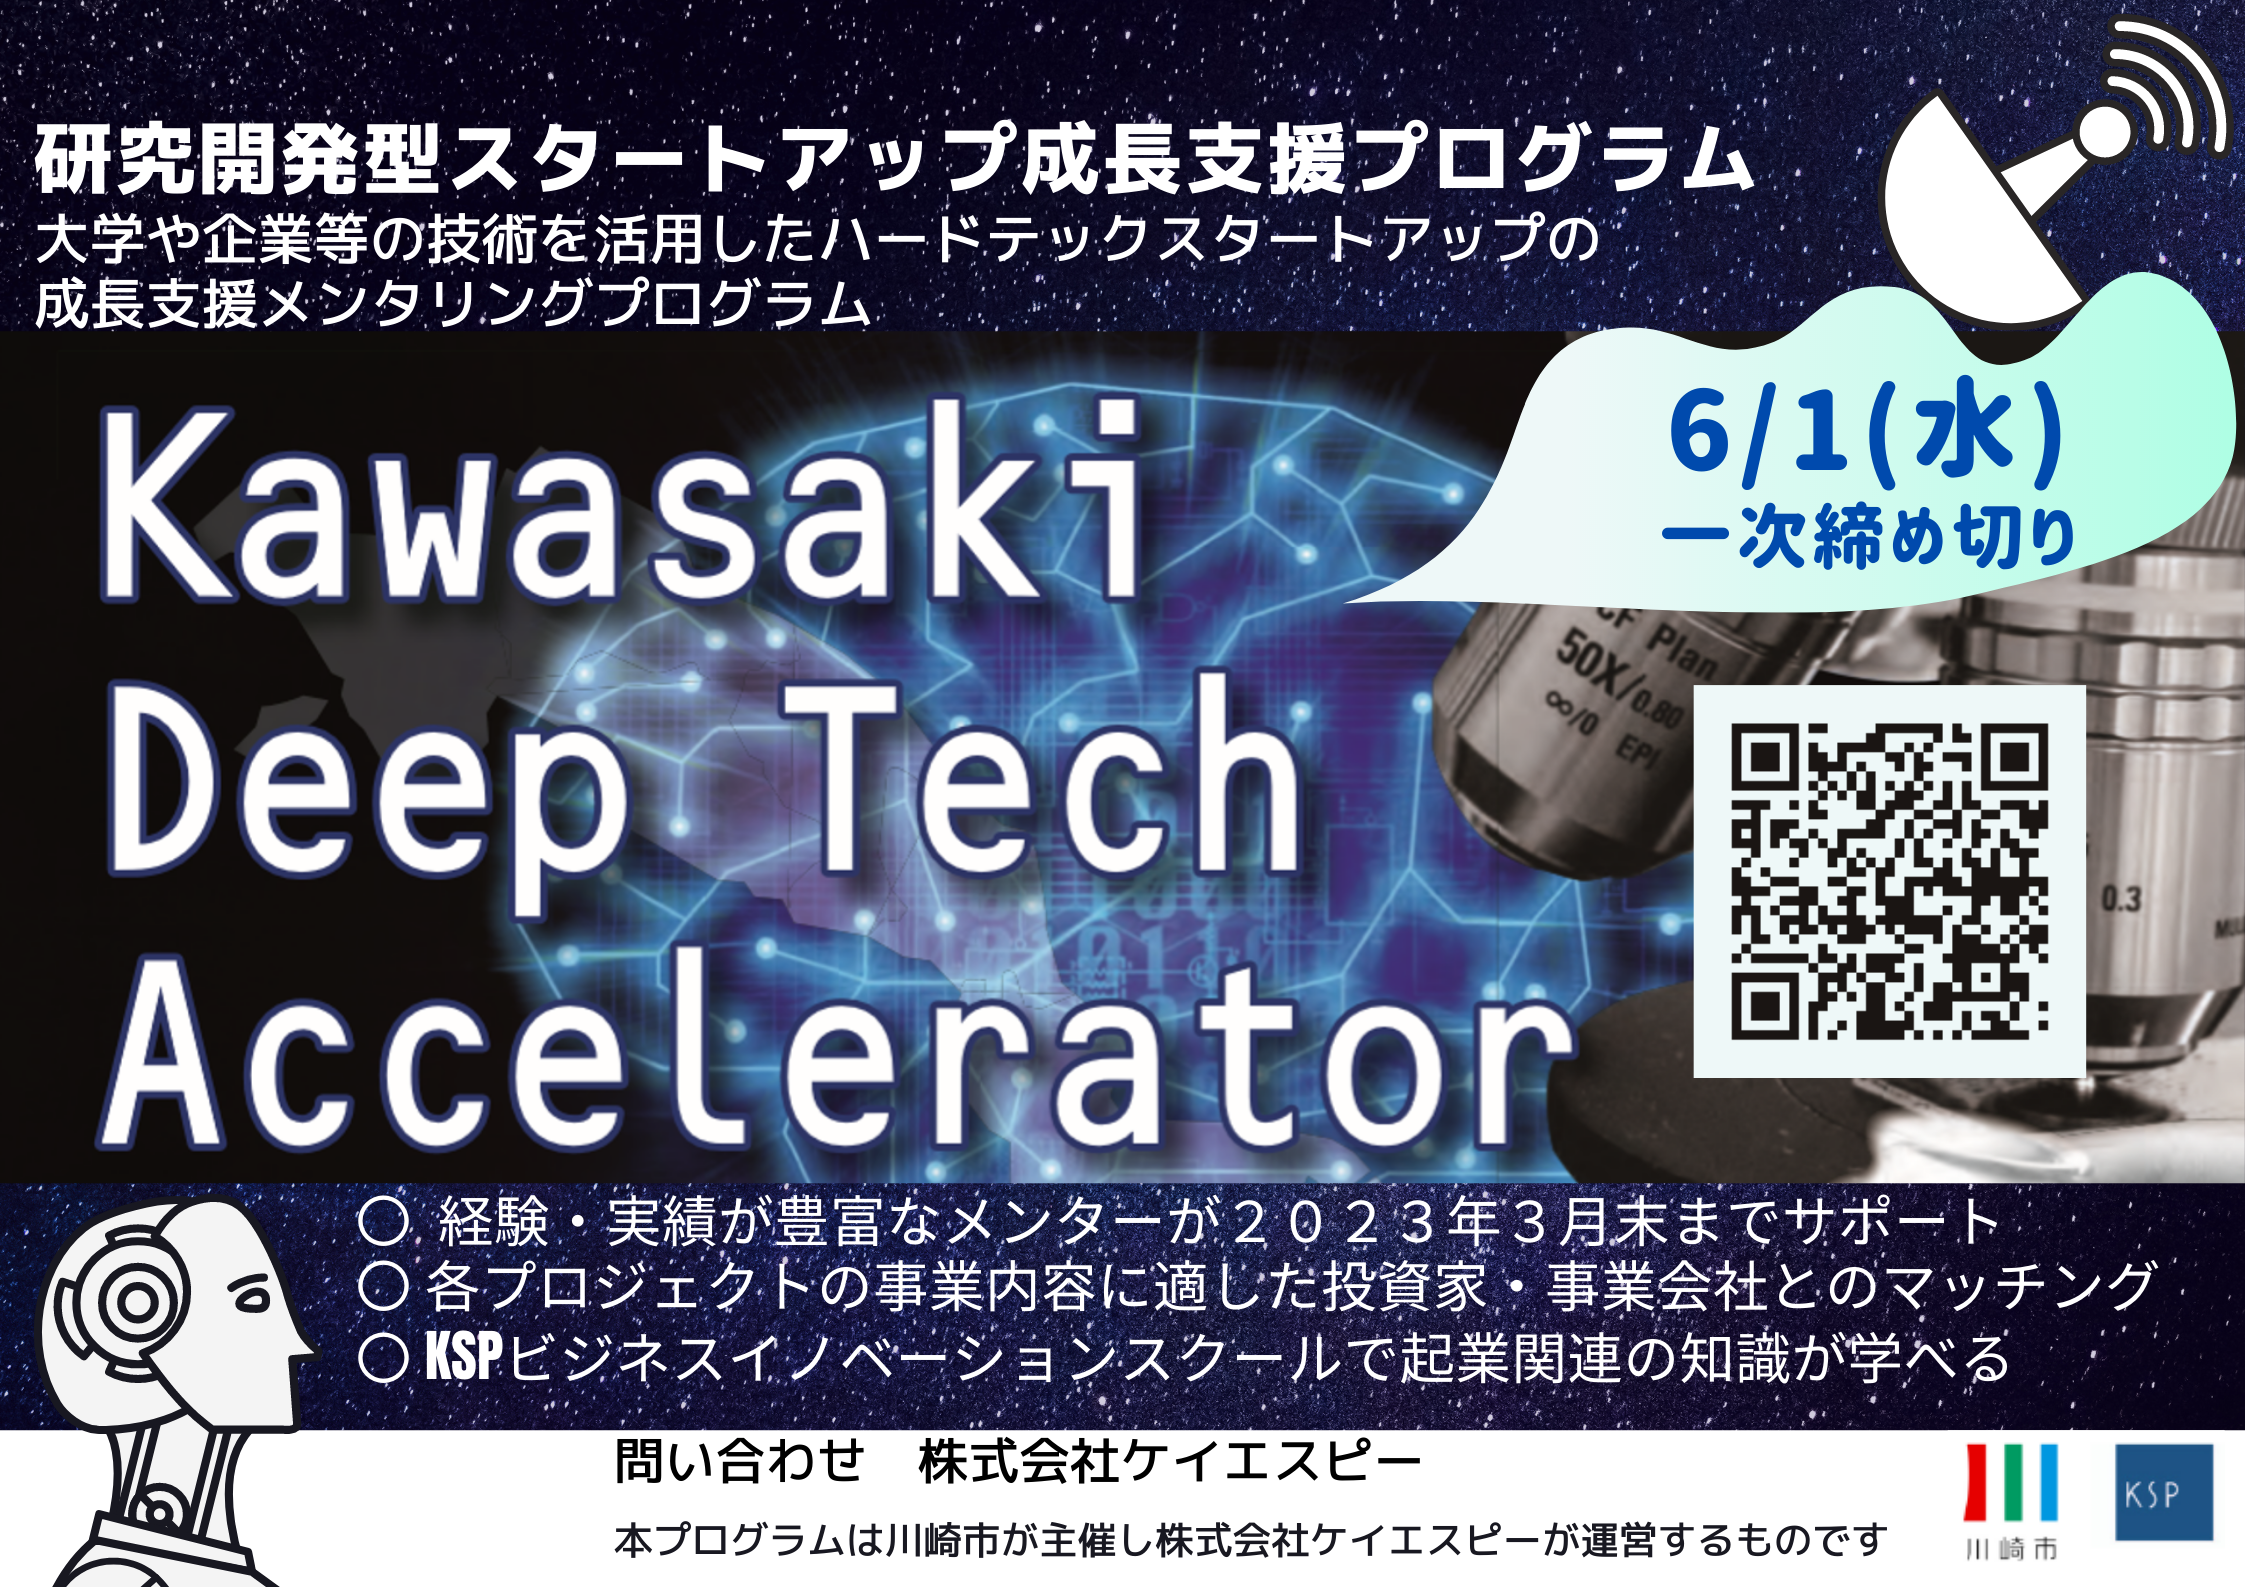 Kawasaki Deep Tech Accelerator 2022エントリー受付は締め切りました